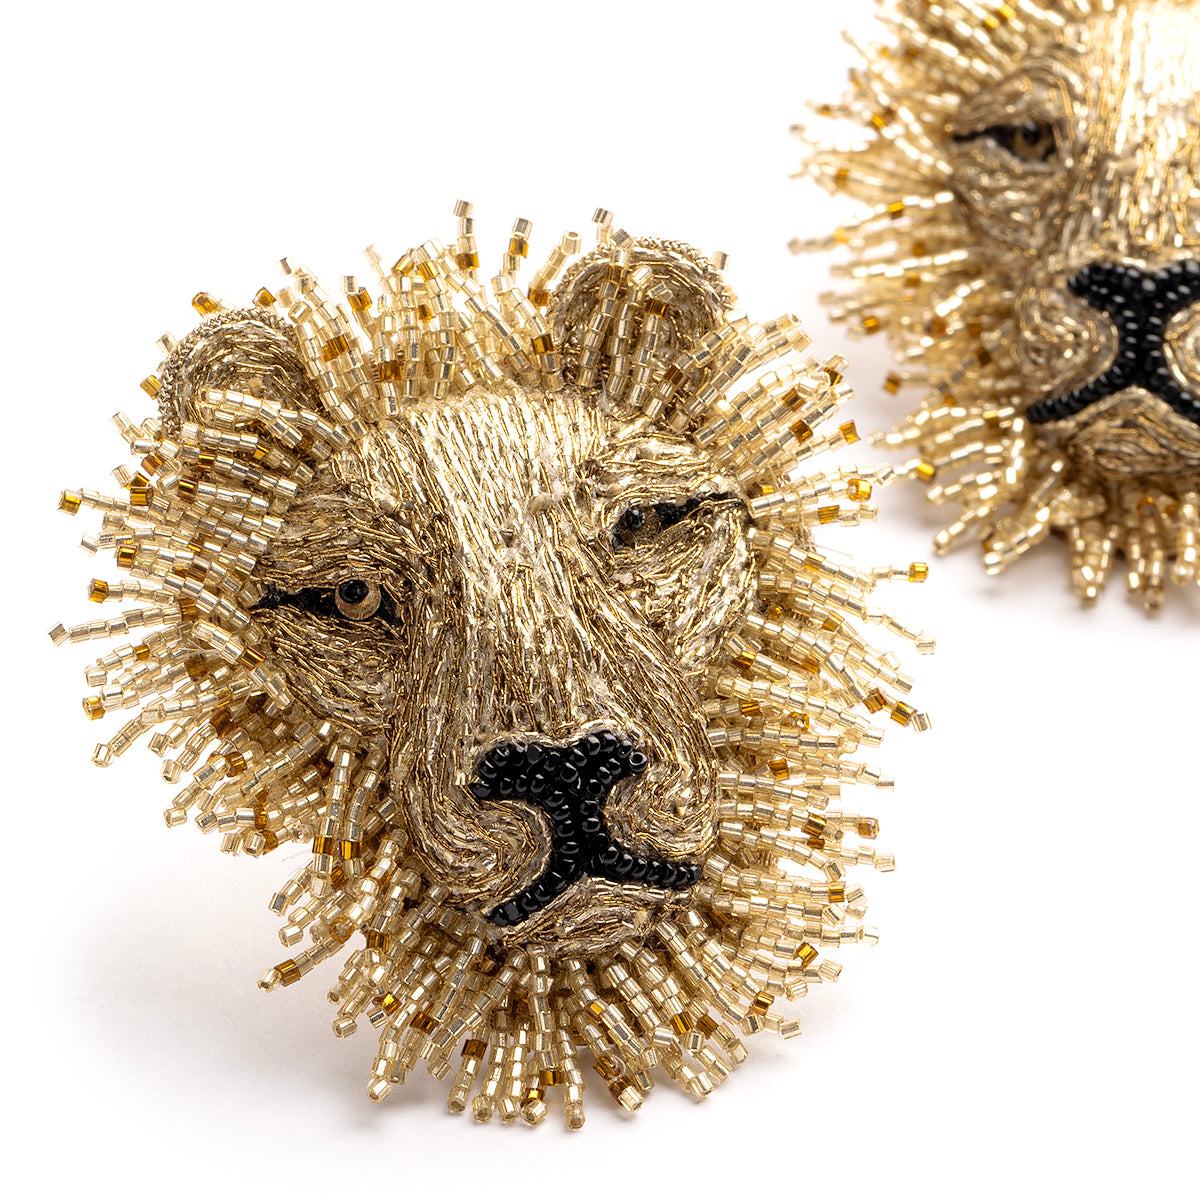 Deepa Gurnani handmade the Lion earrings in gold color